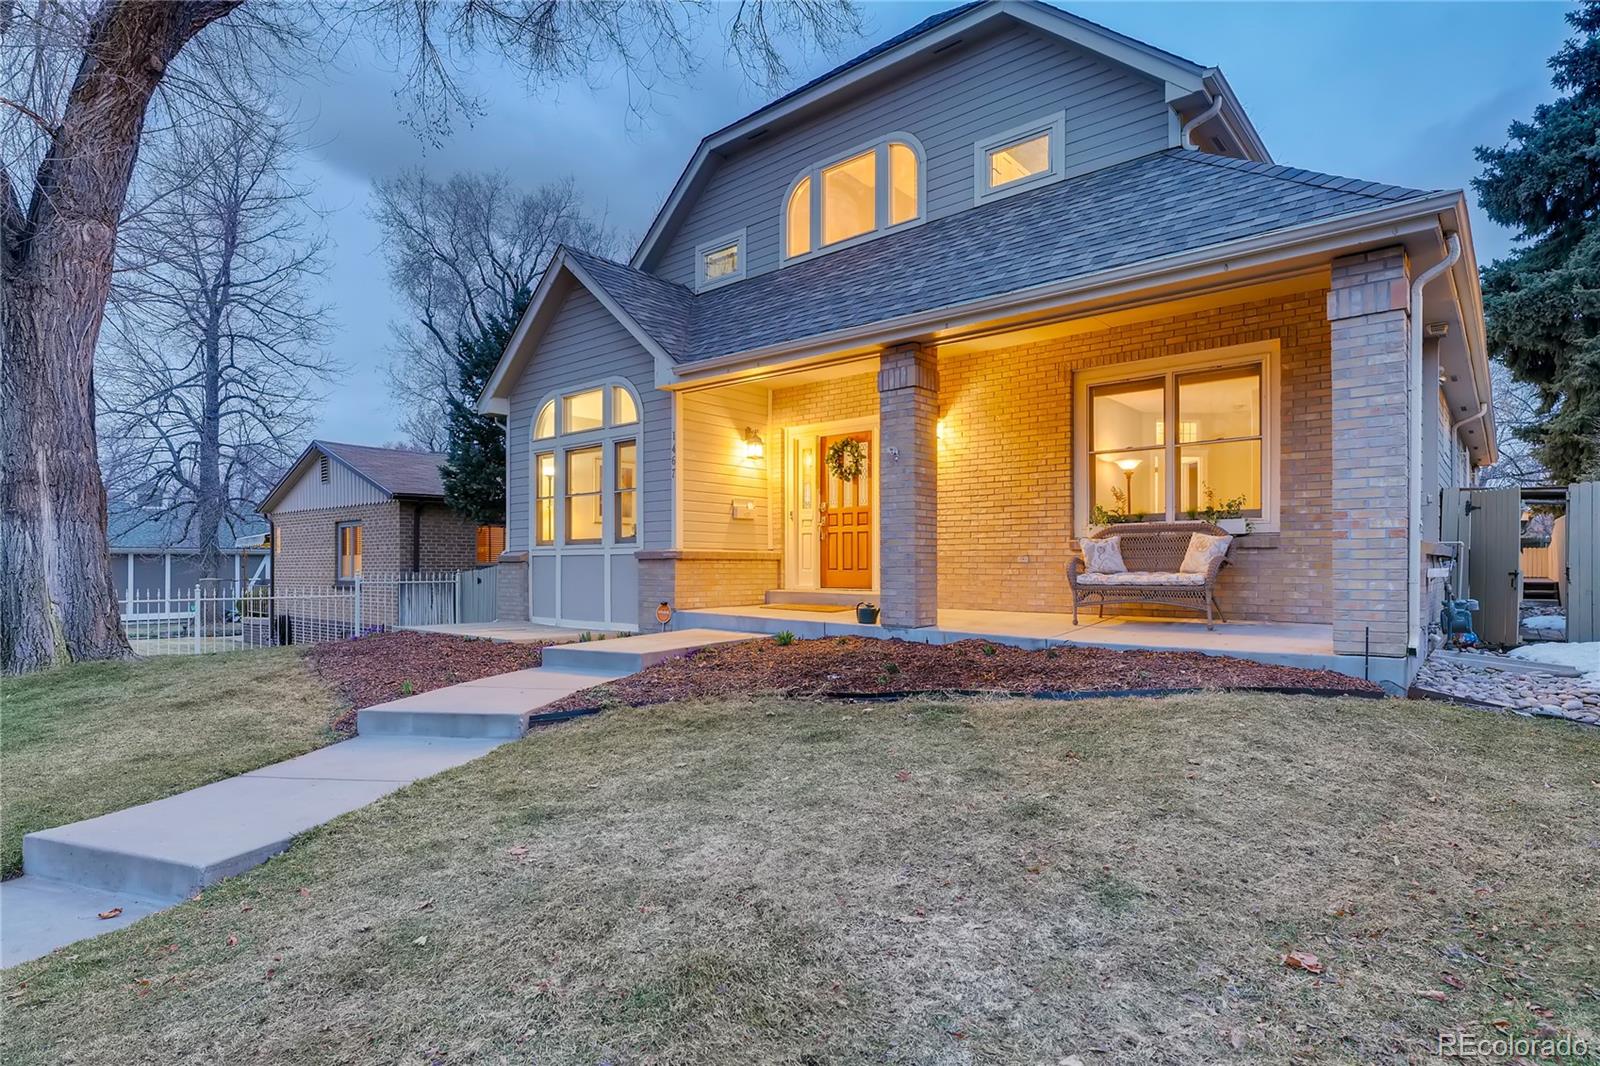 Average Denver Home Prices Reach $674k